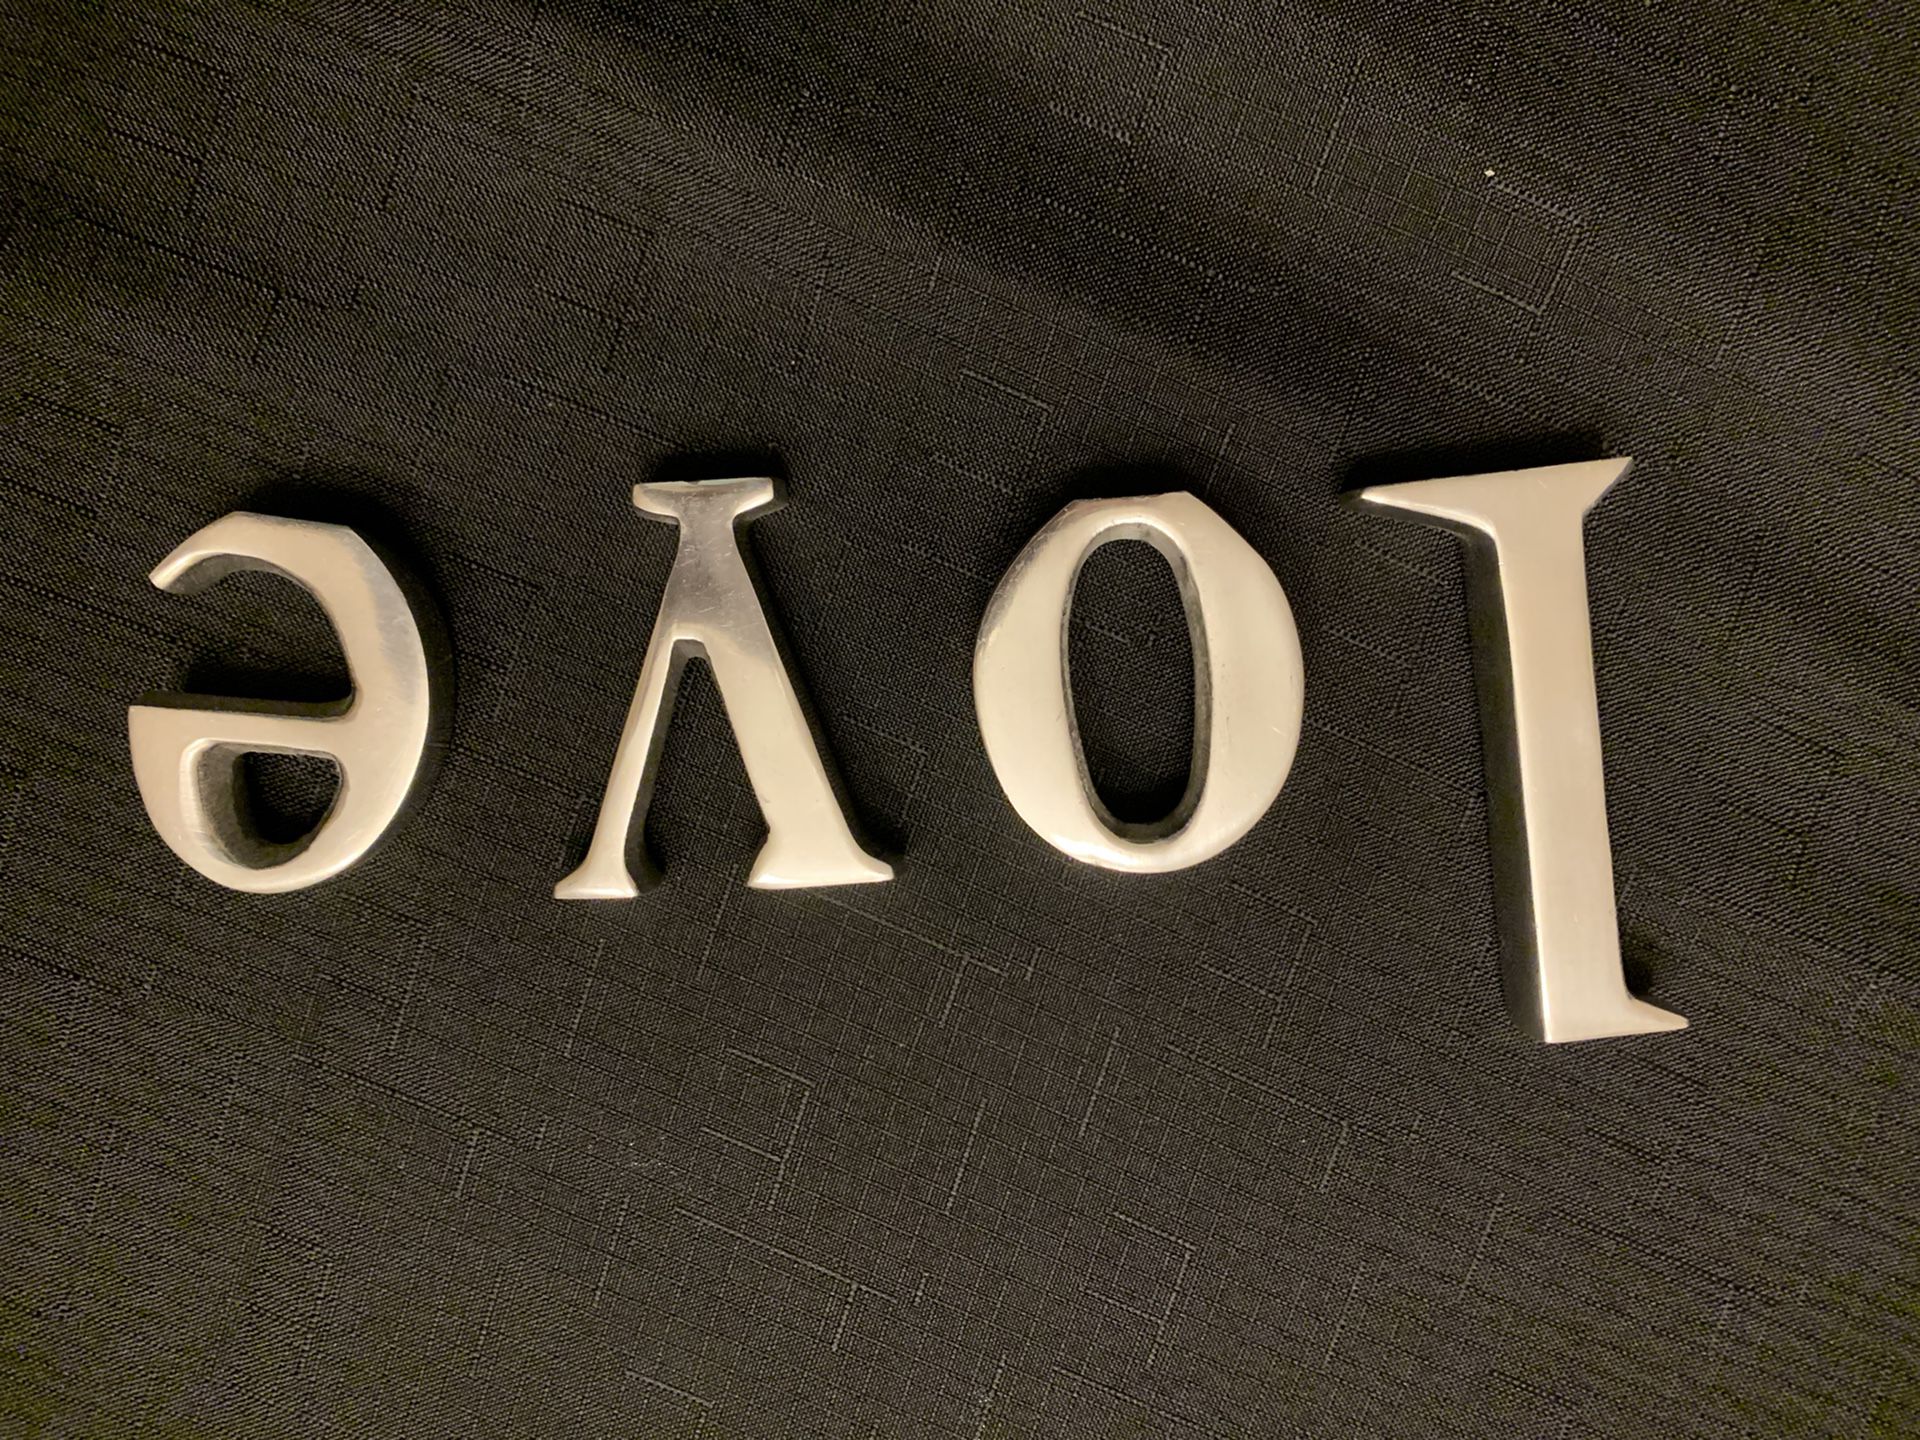 Metal 3” letters